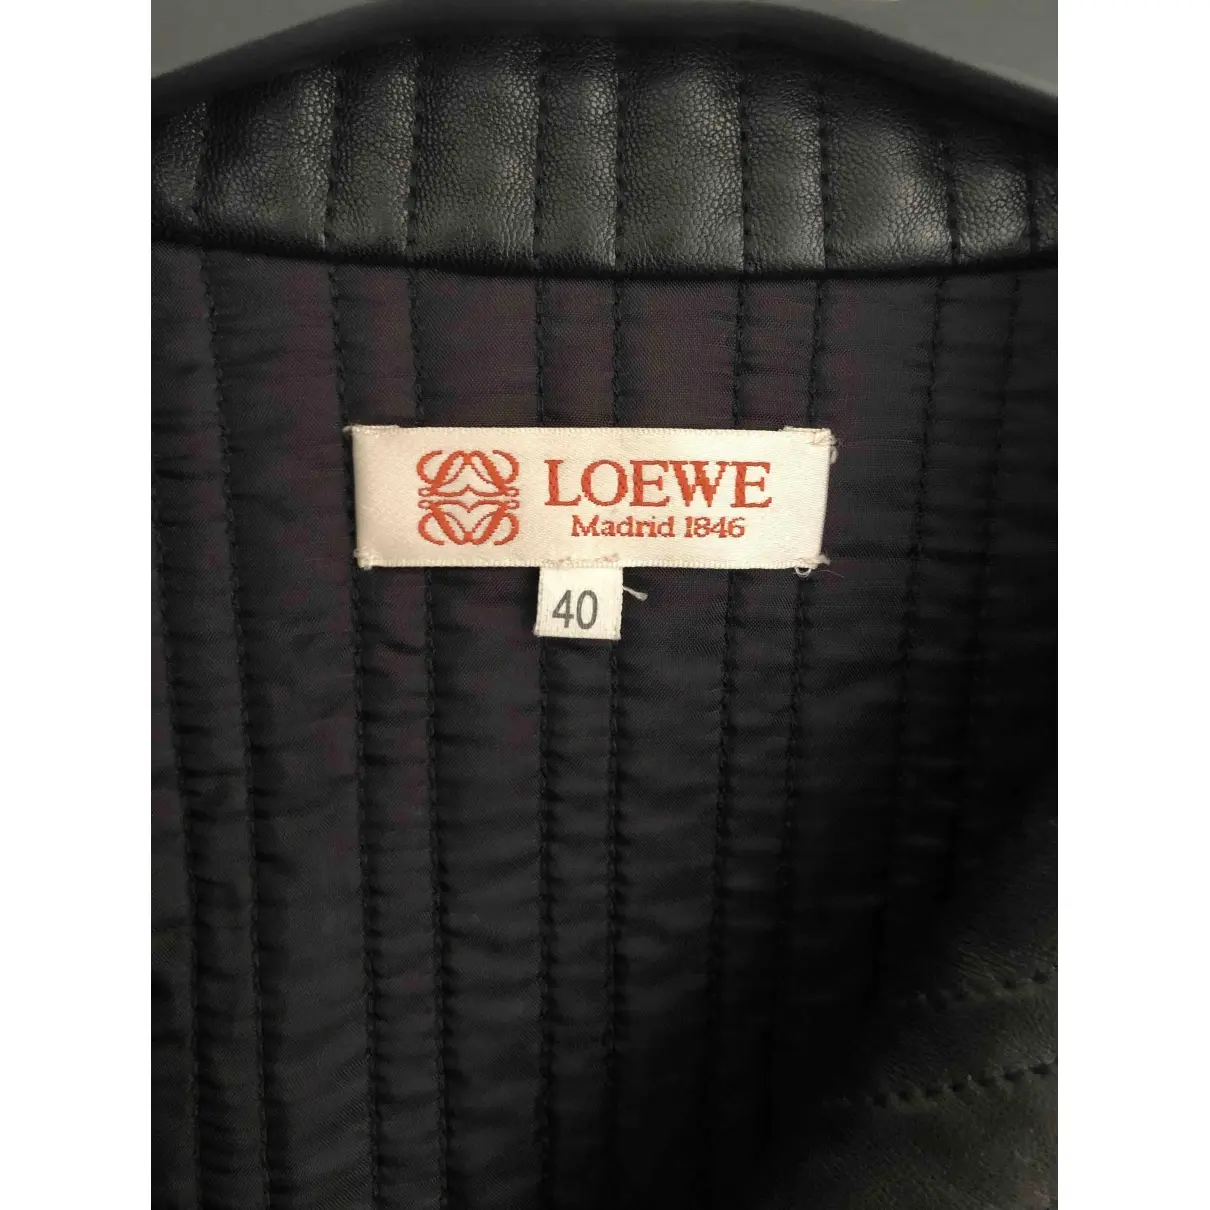 Loewe Leather coat for sale